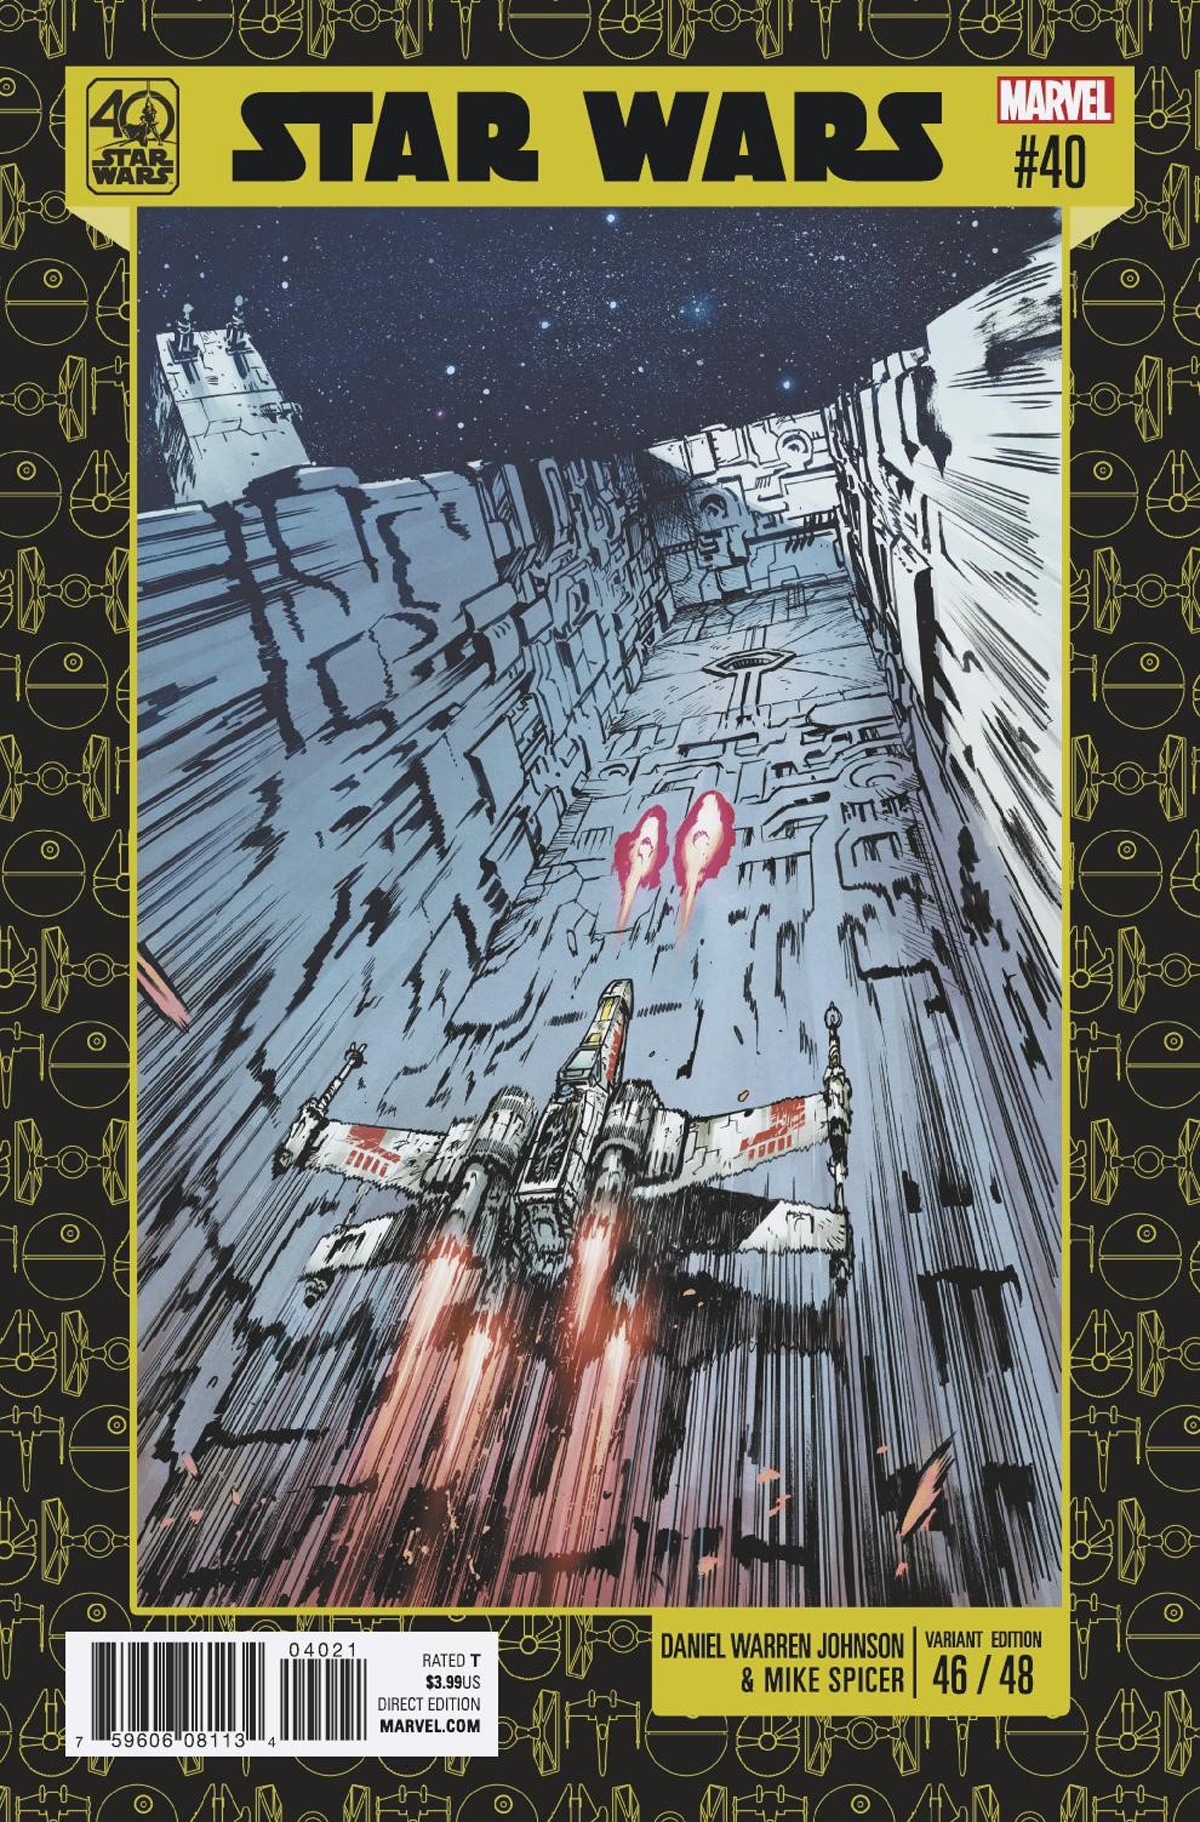 Star Wars #40 (Daniel Warren Johnson Star Wars 40th Anniversary Variant Cover) (13.12.2017)